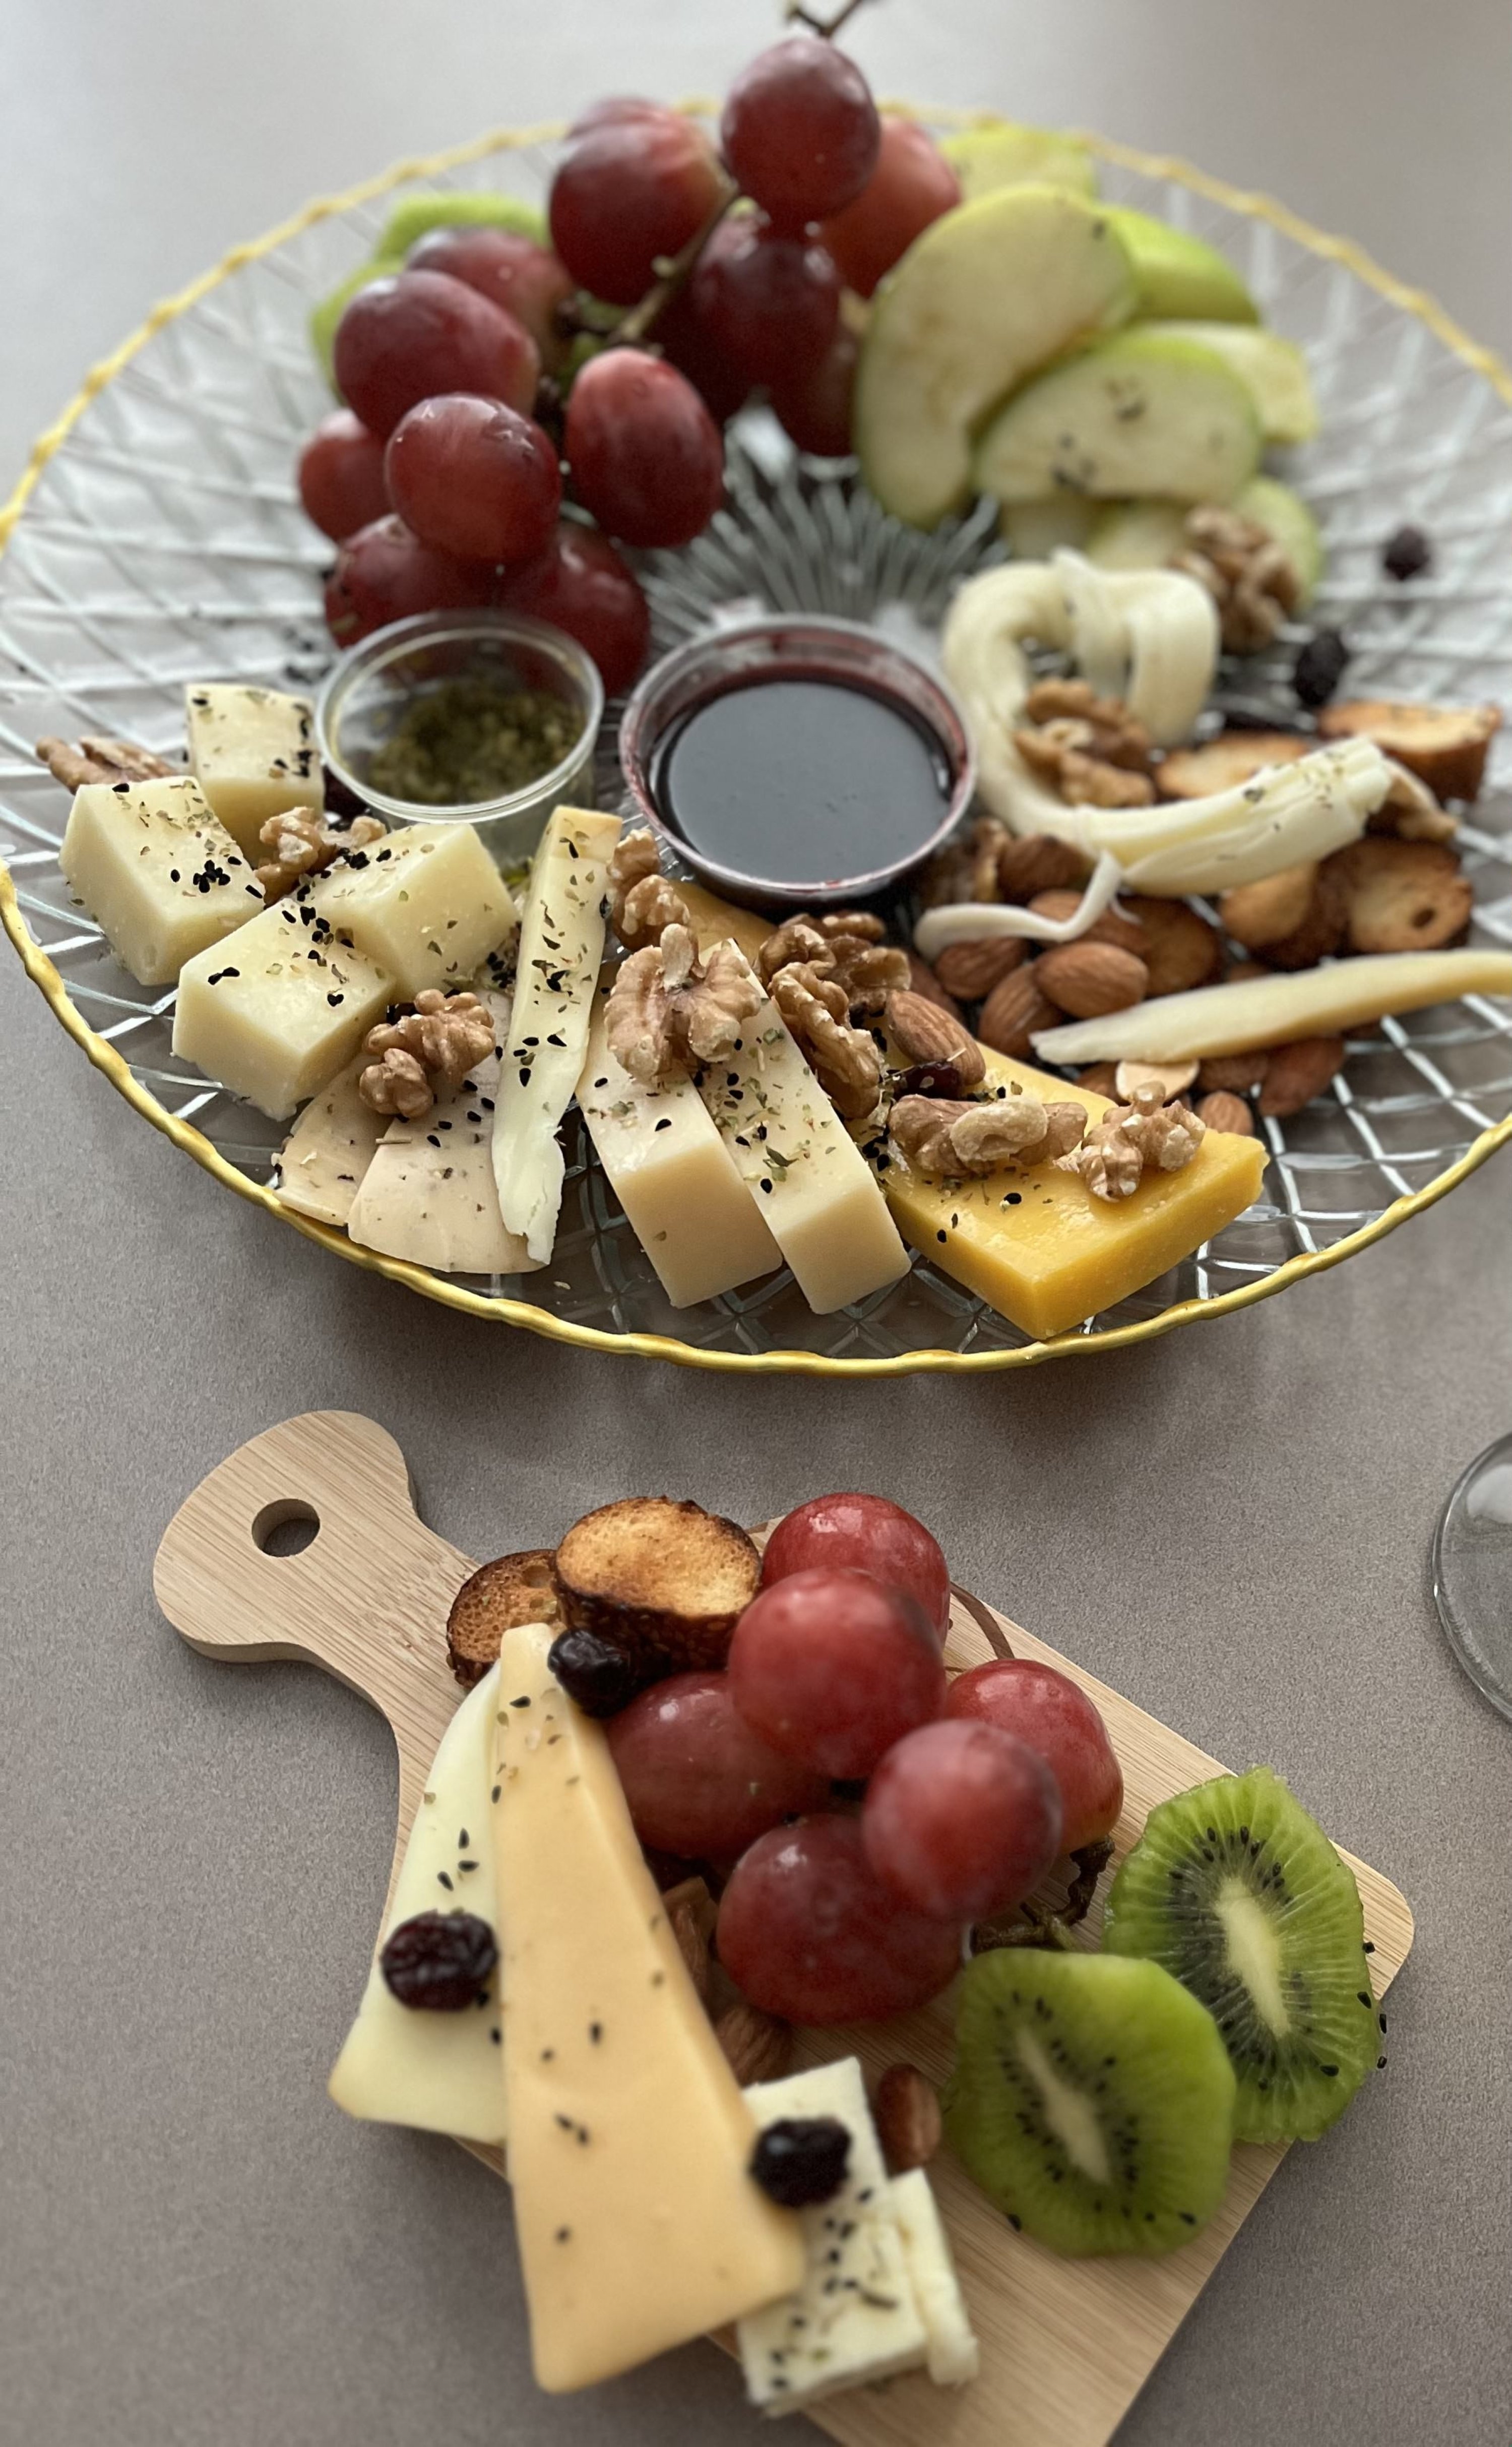 Cheese and fruit platters. (Photo by Burcu Başaran)